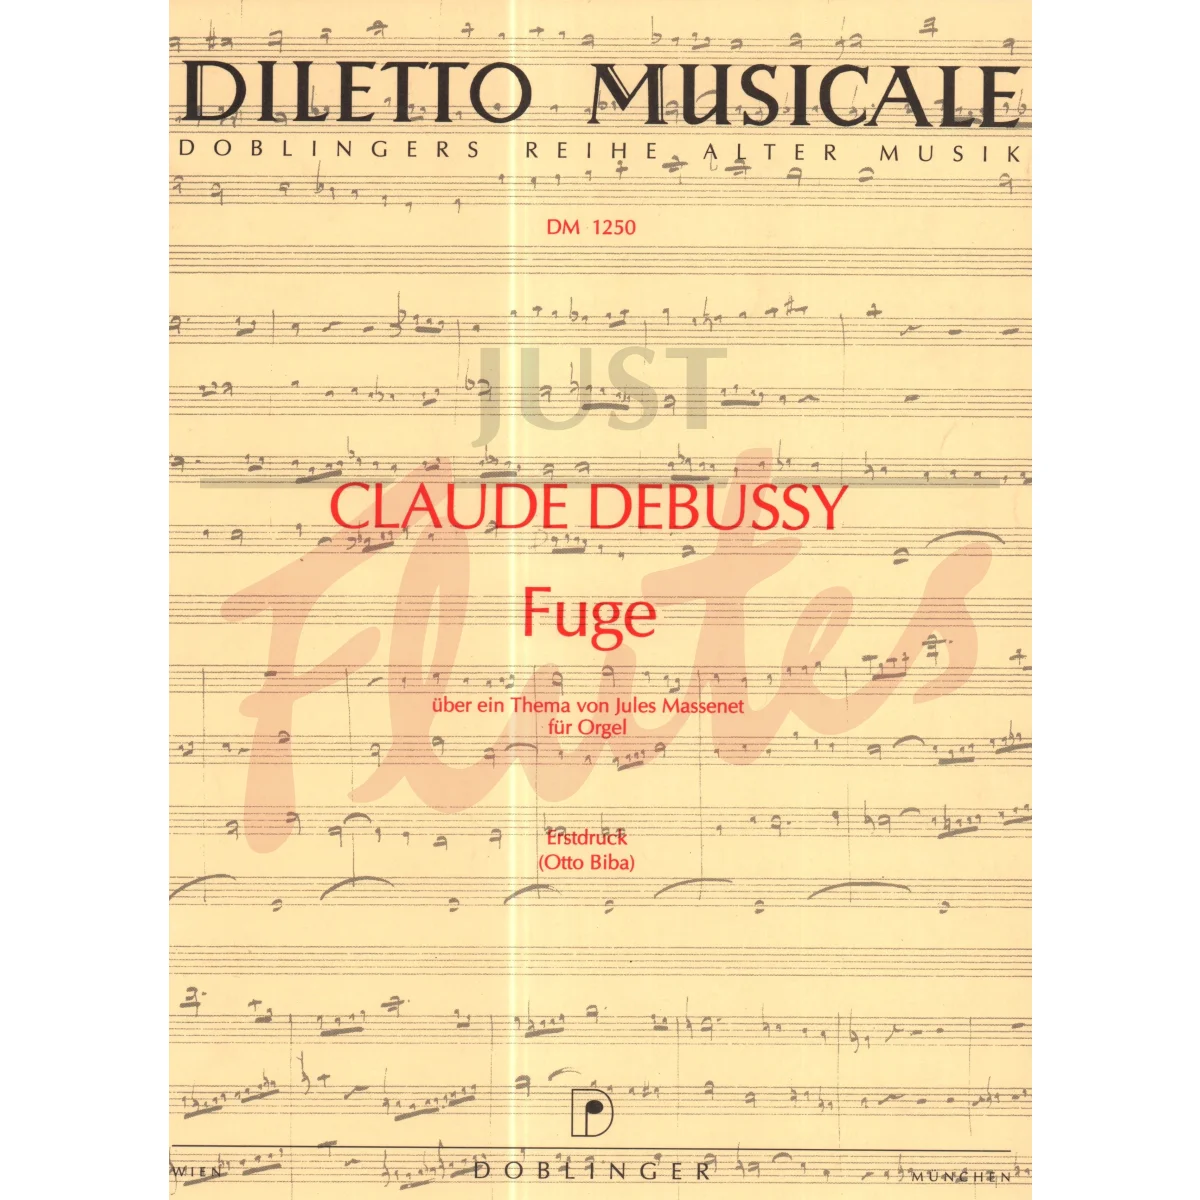 Fugue on a Theme of Massenet [Organ]